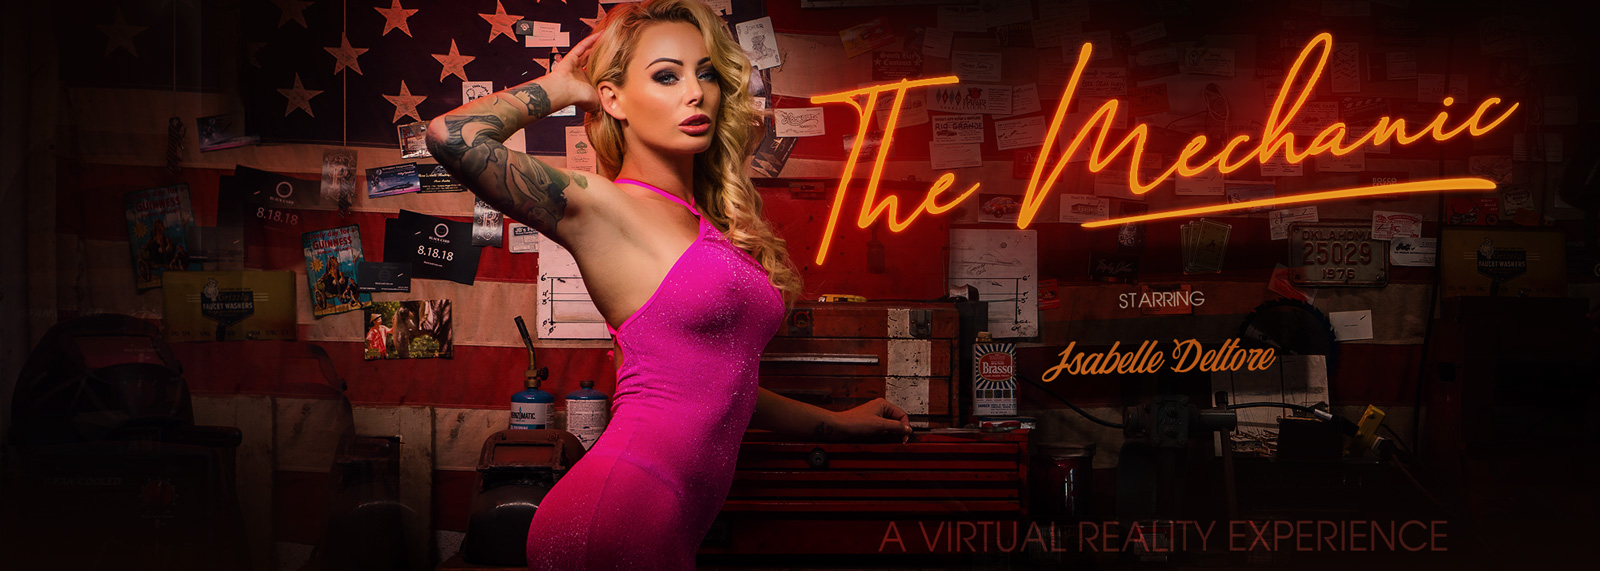 The Mechanic - VR Porn Video, Starring: Isabelle Deltore